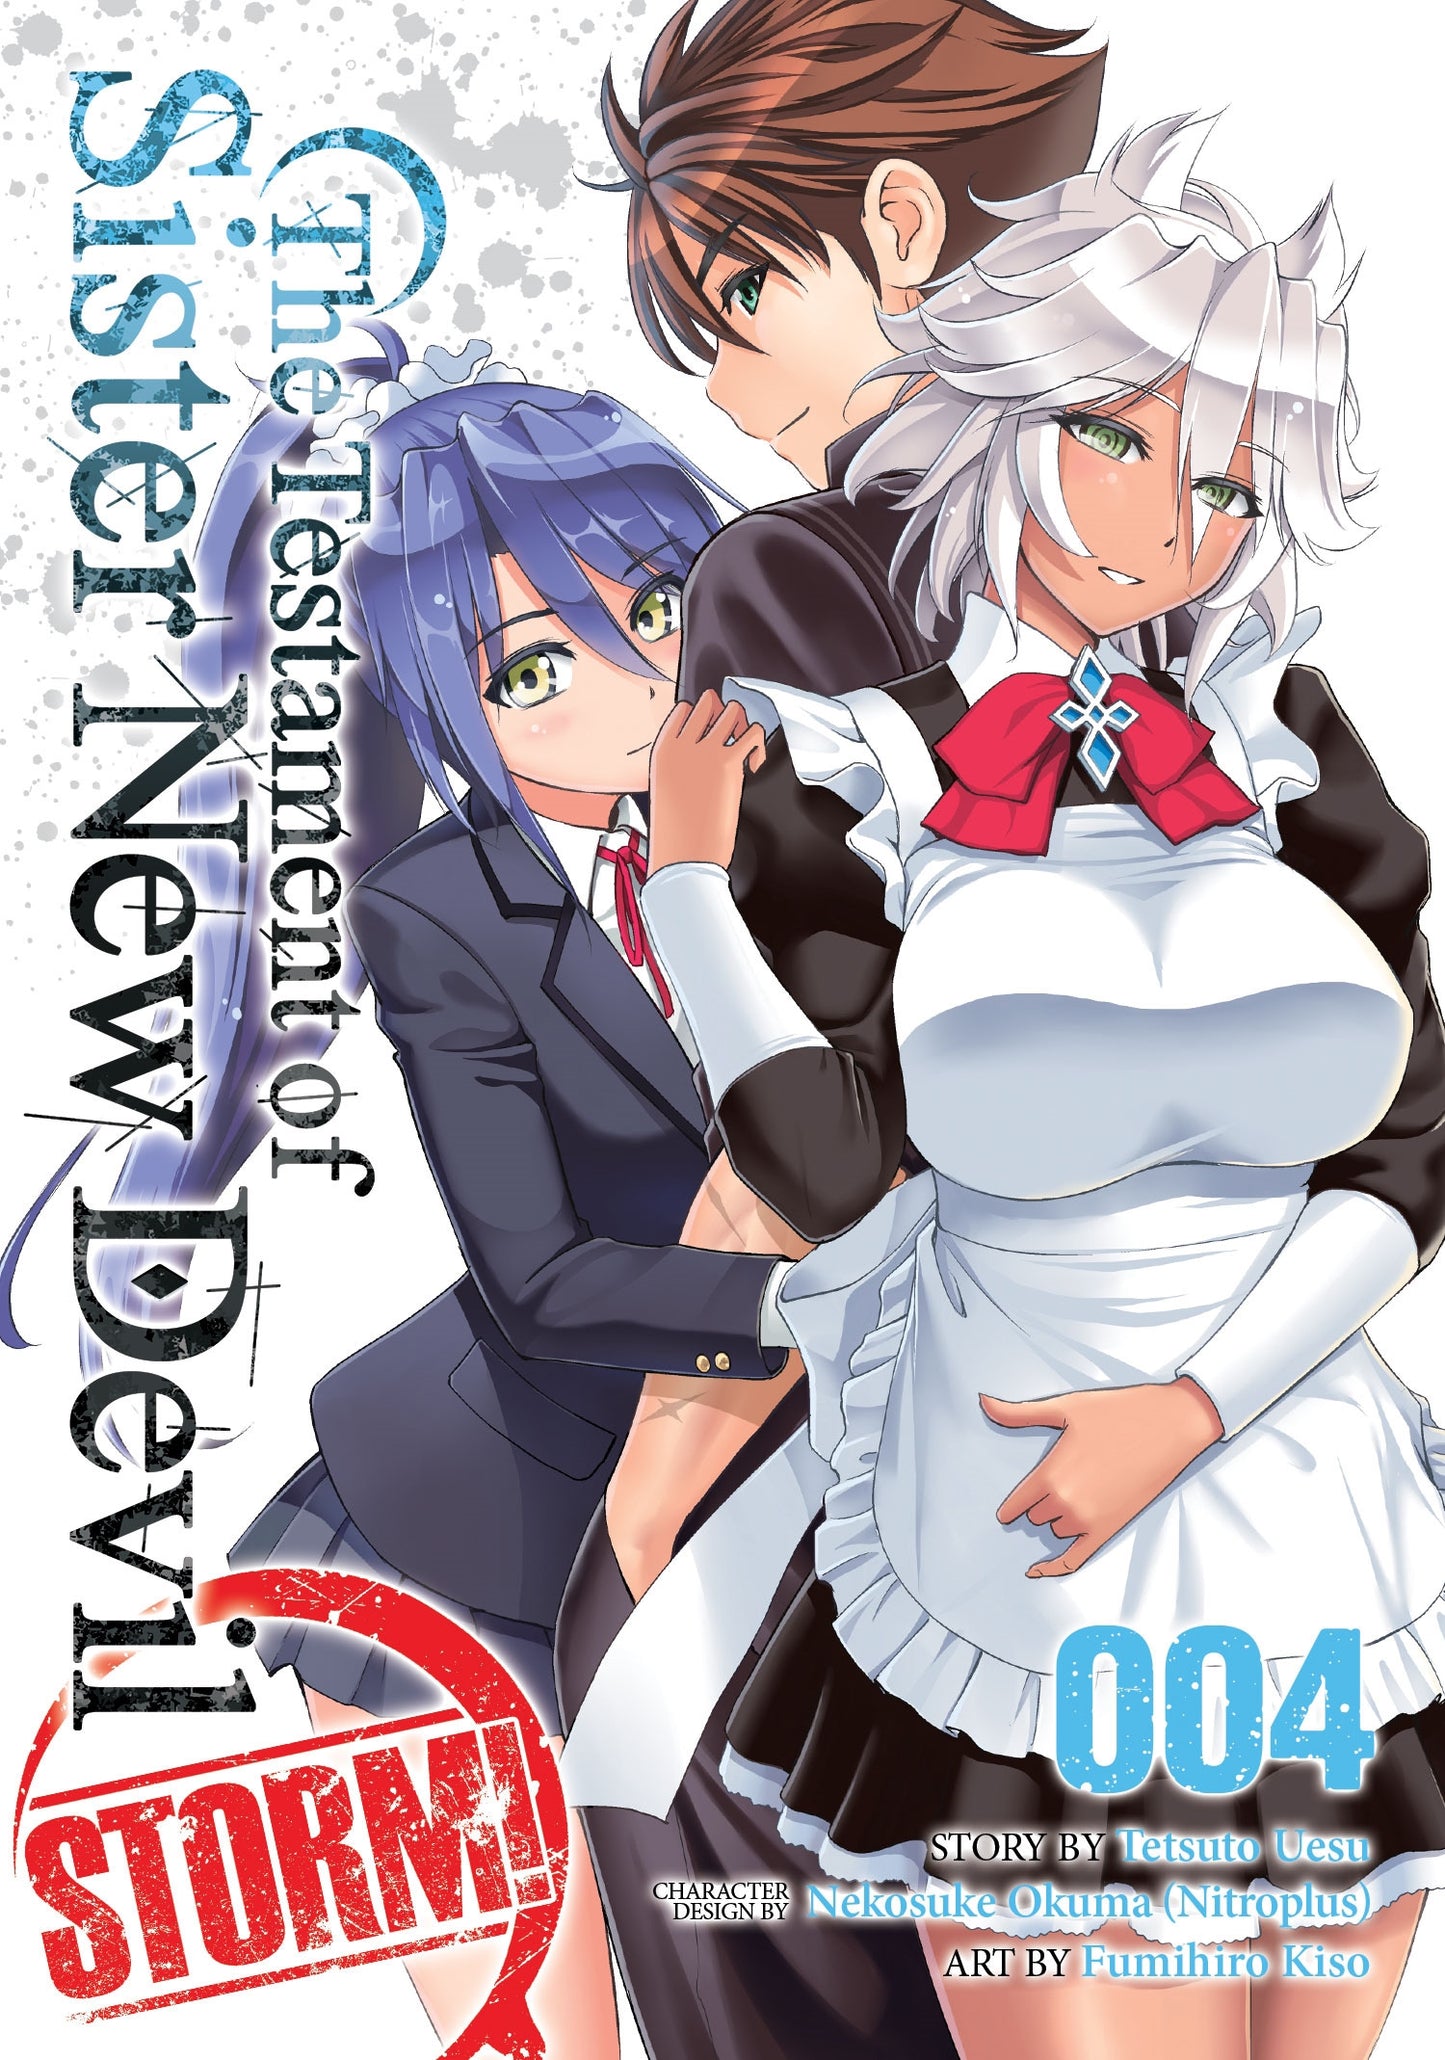 The Testament of Sister New Devil STORM! Vol. 4 - Manga Warehouse